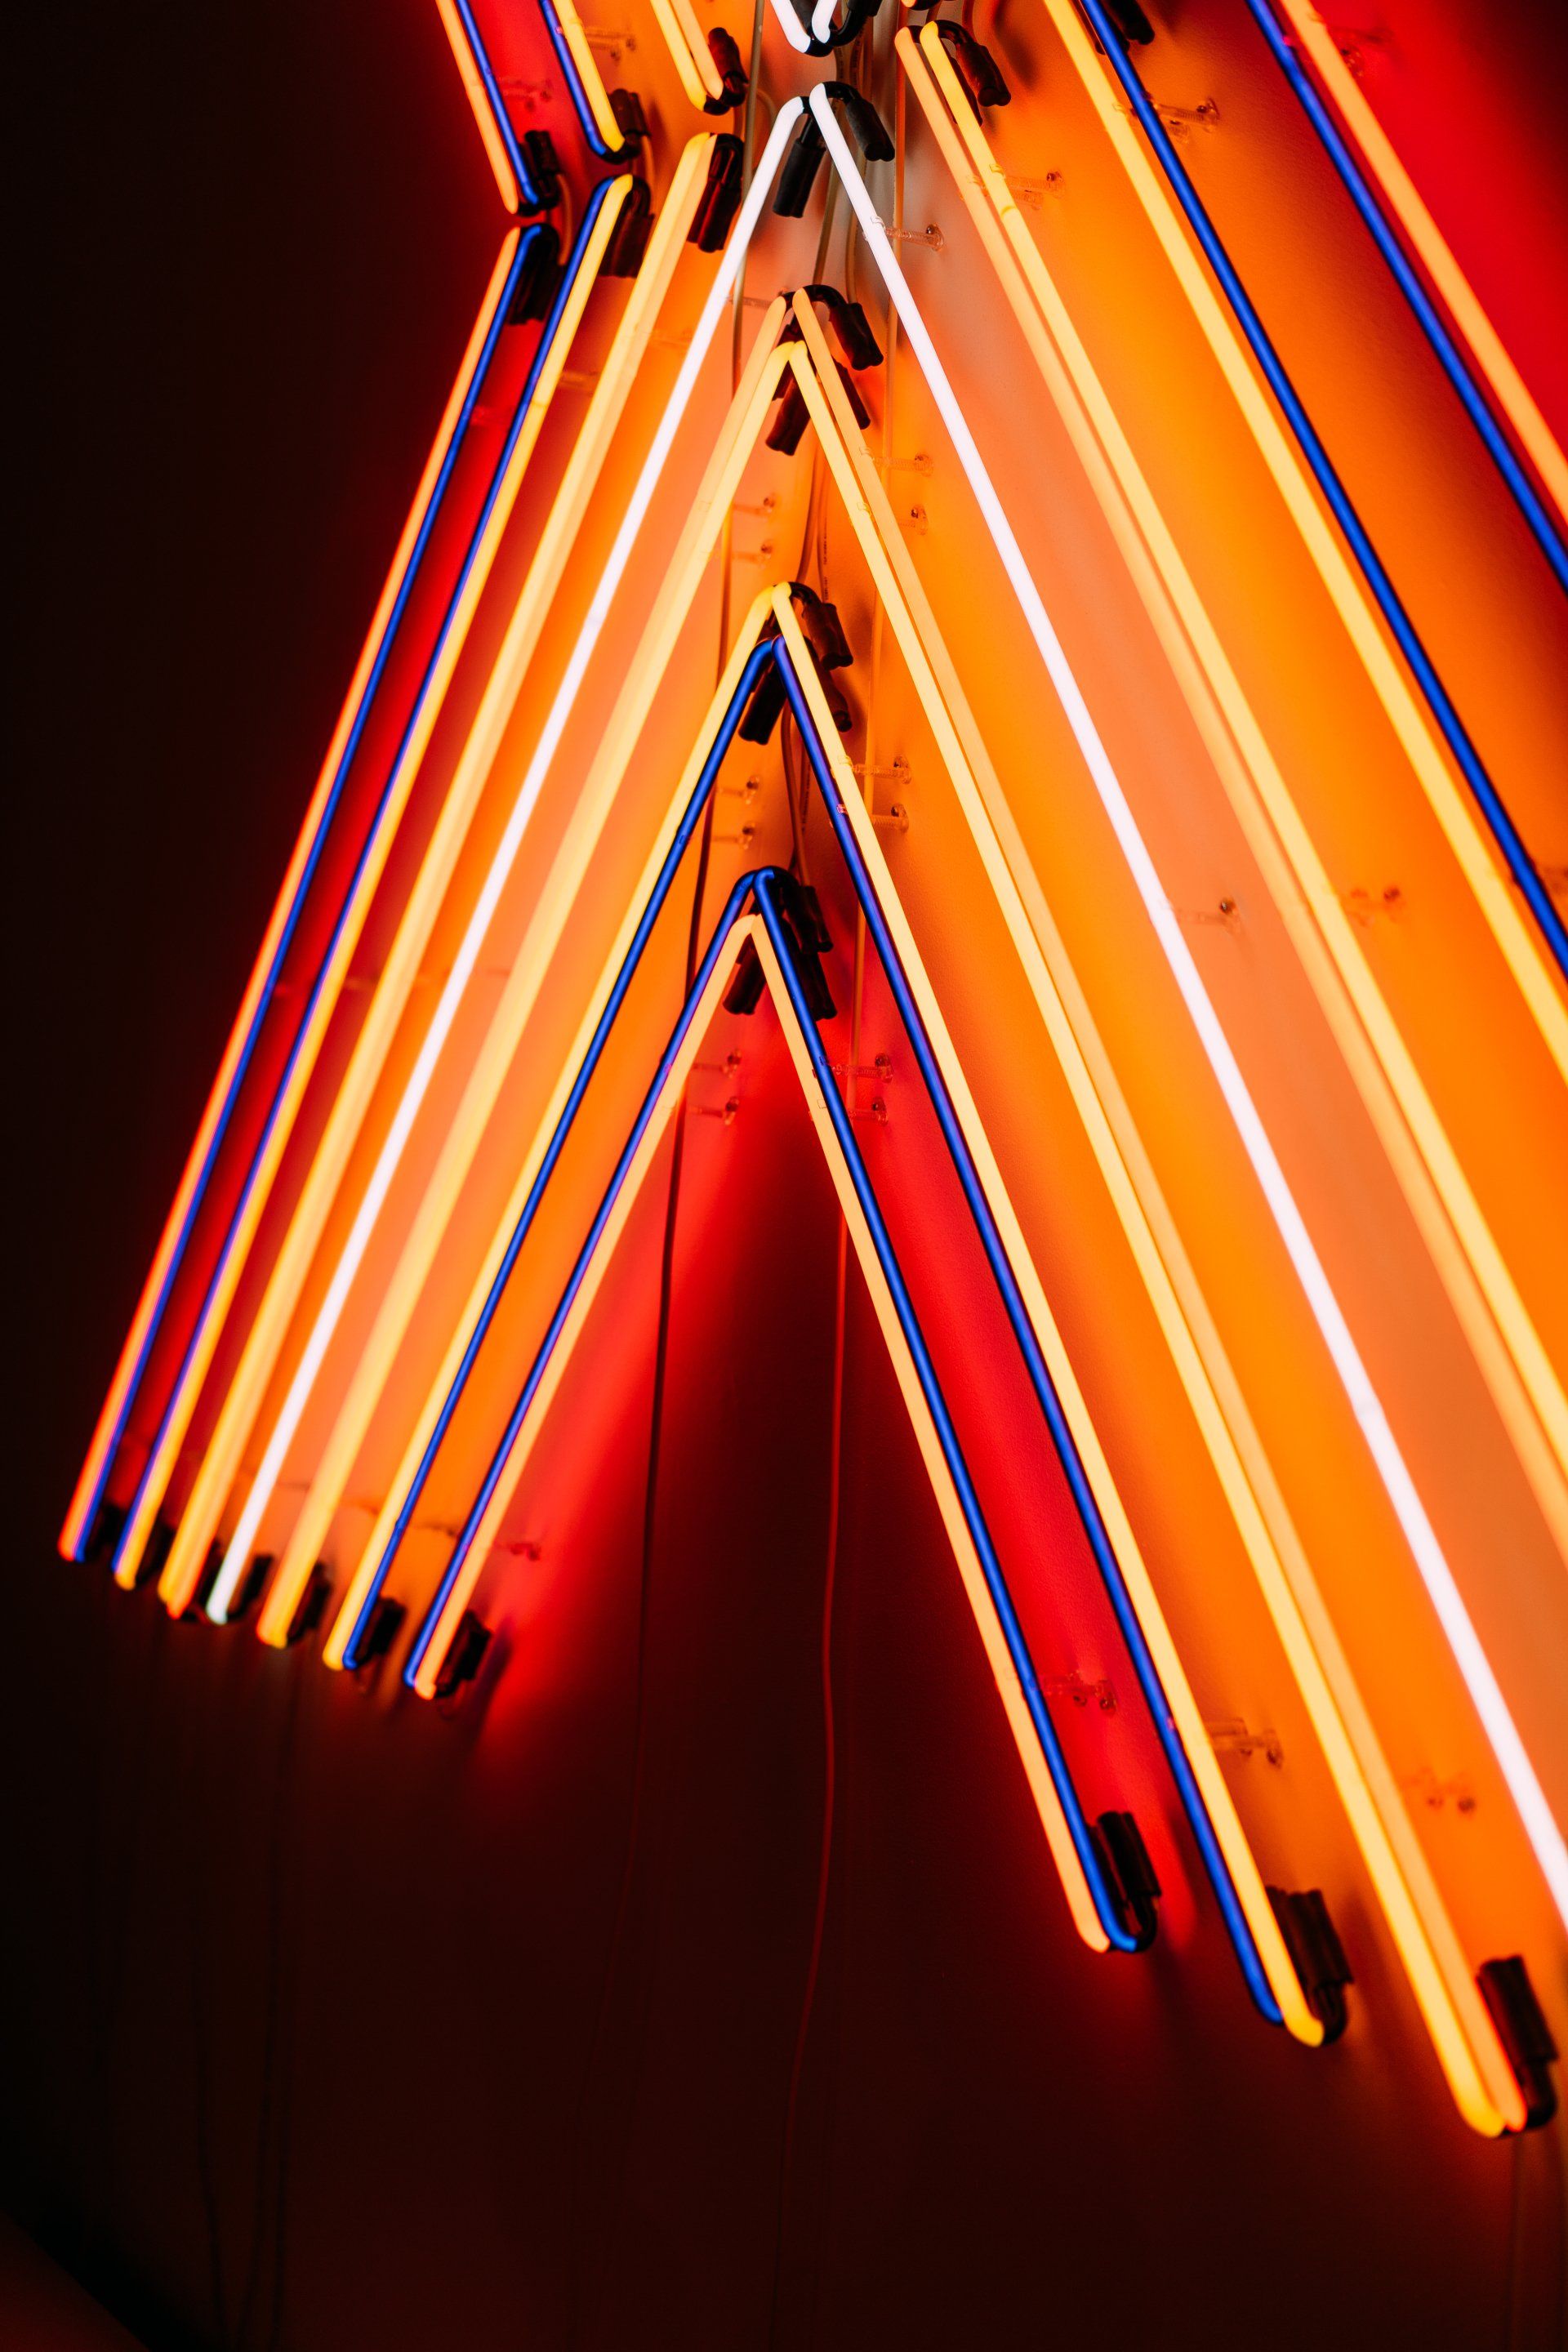 Orange neon bar lights in a V shape or mountain shape